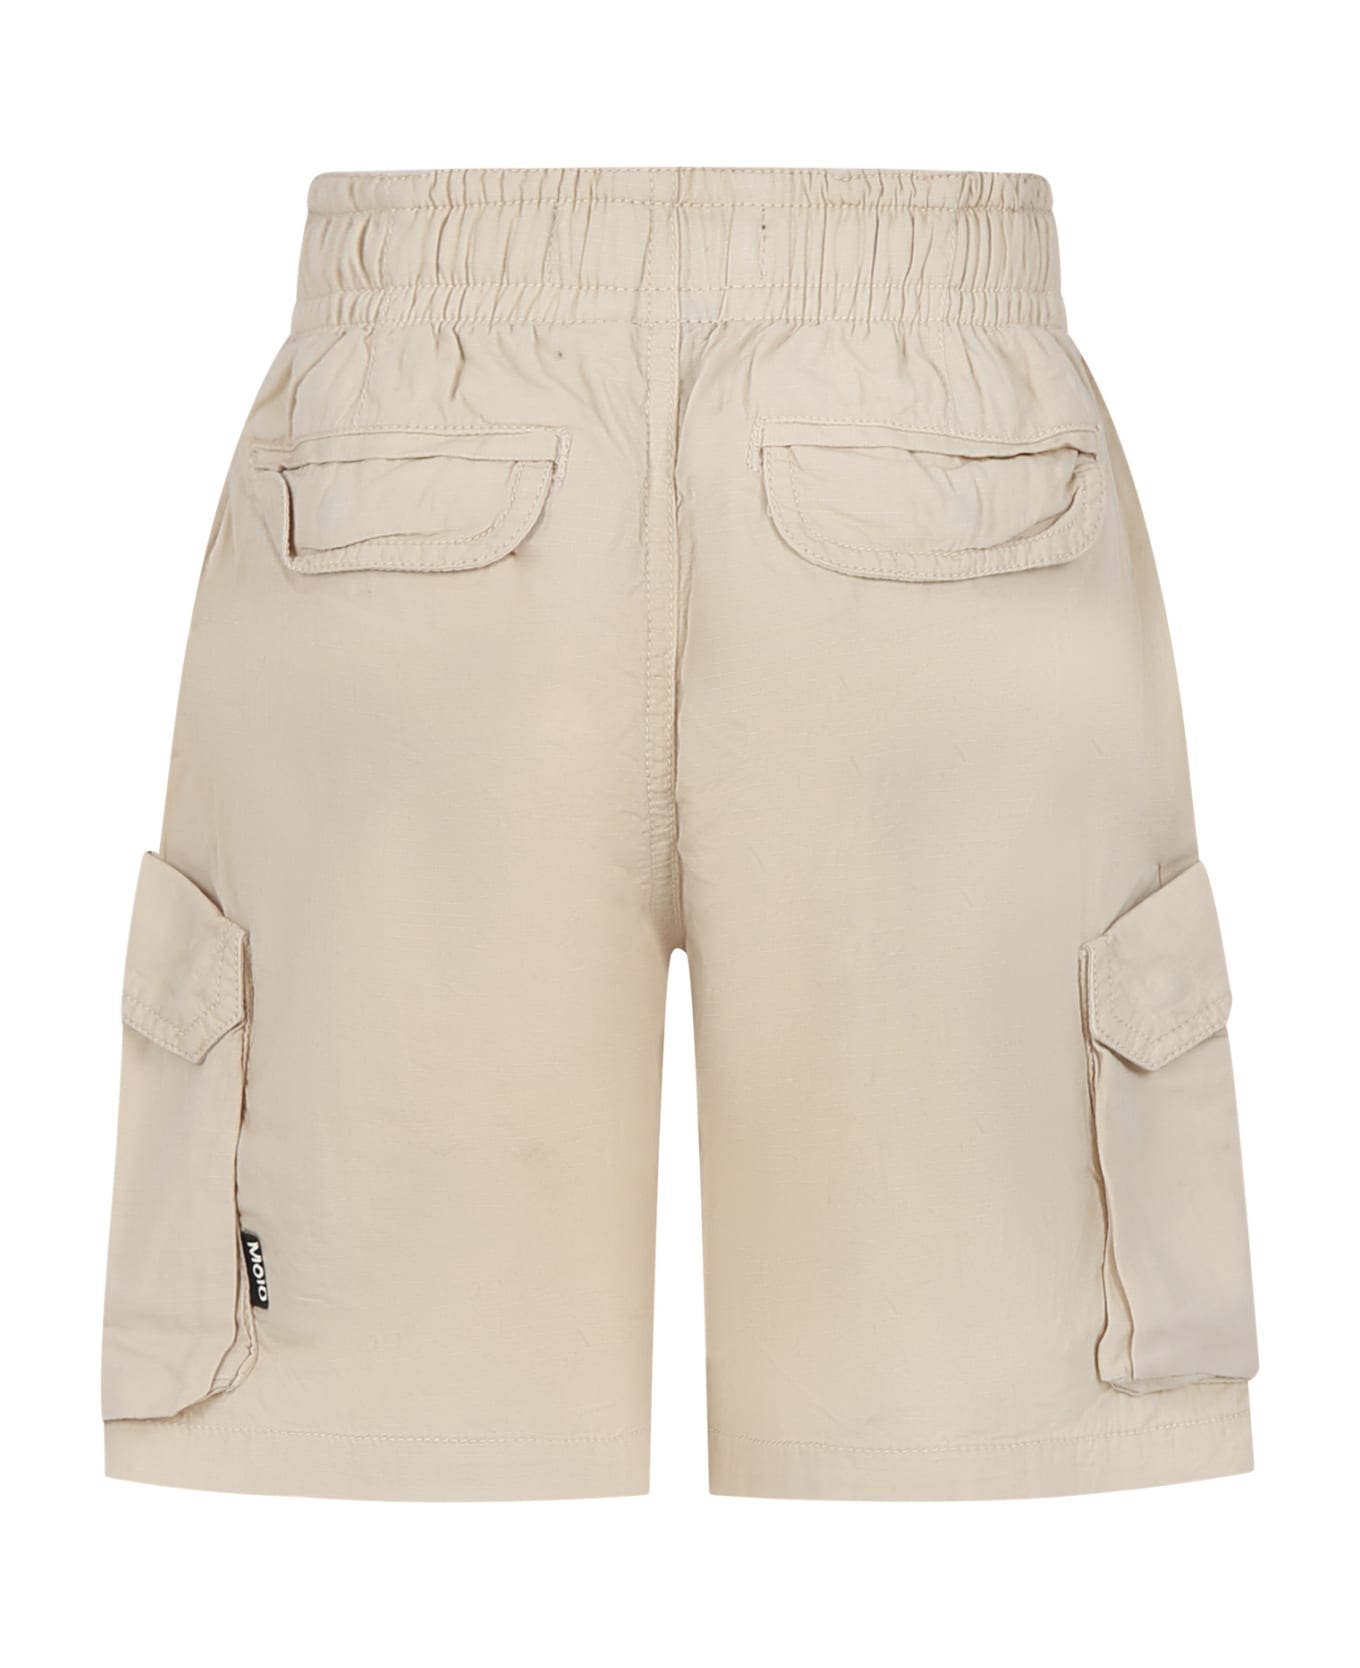 Molo Casual Argod Ivory Shorts For Boy - Ivory